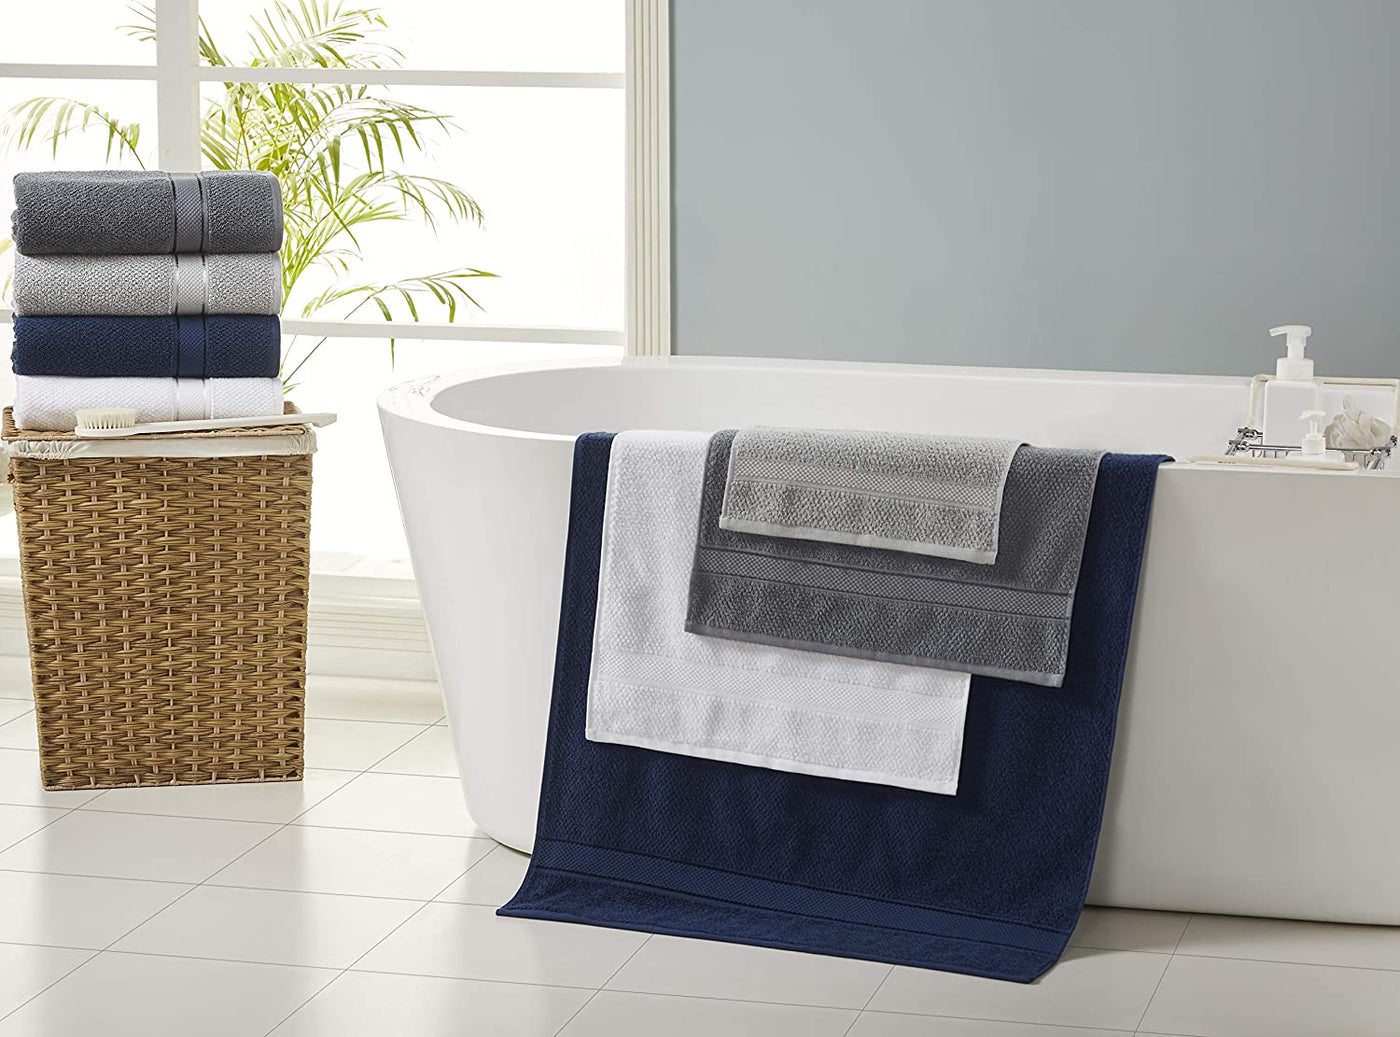 Senses Textured Rice Weave 6 Piece Bathroom Towel Set (White)